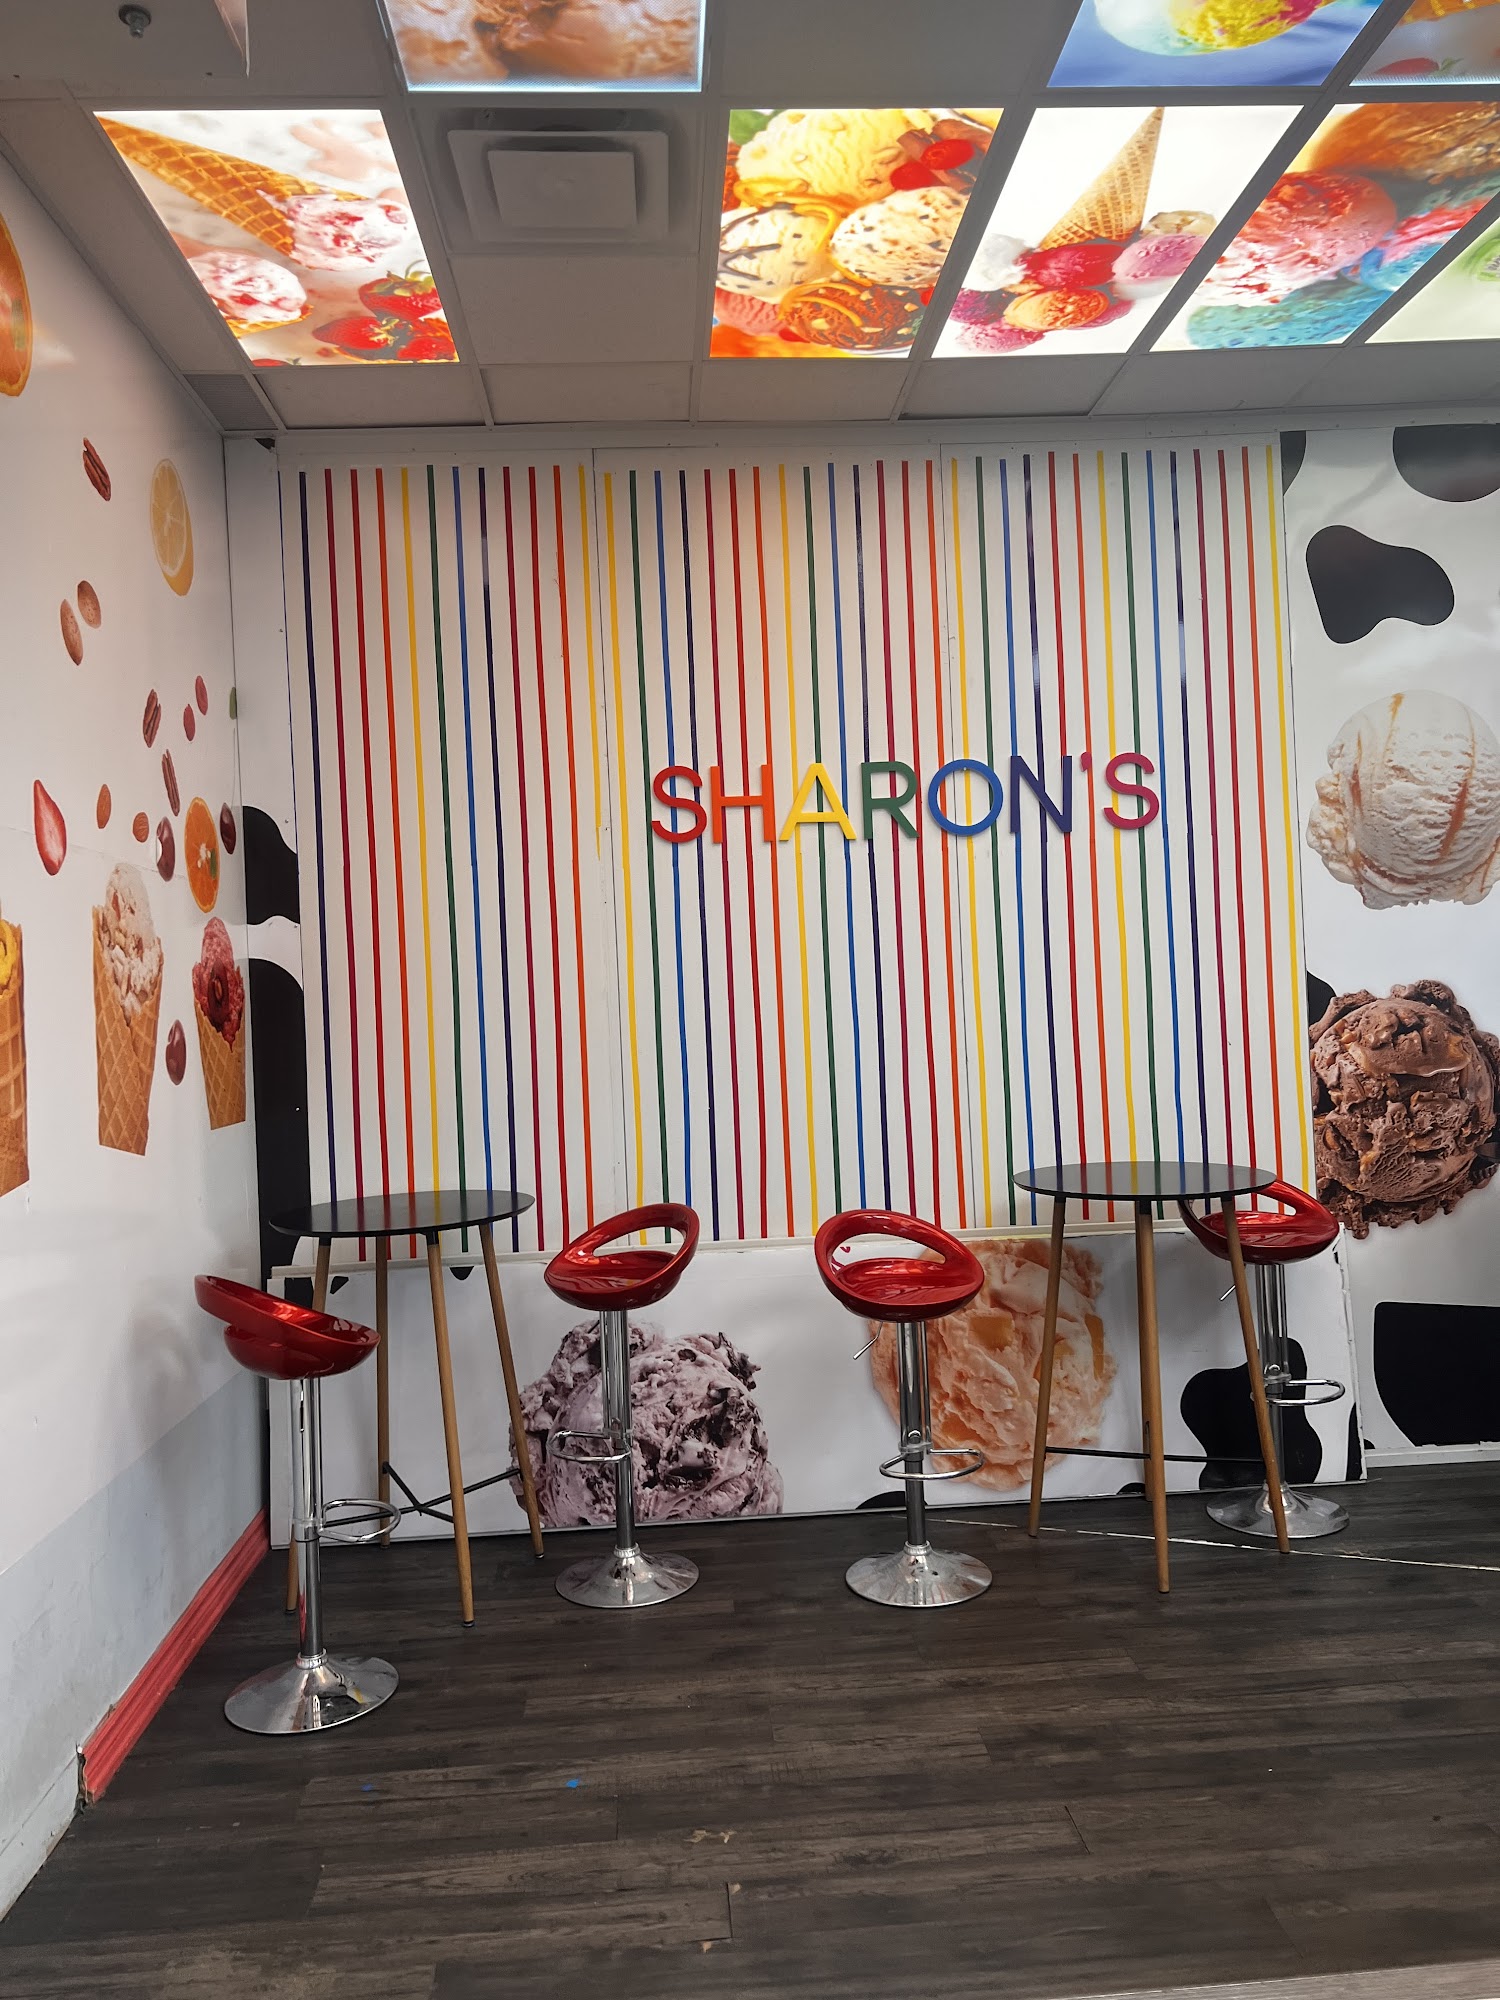 Sharon's Ice Cream